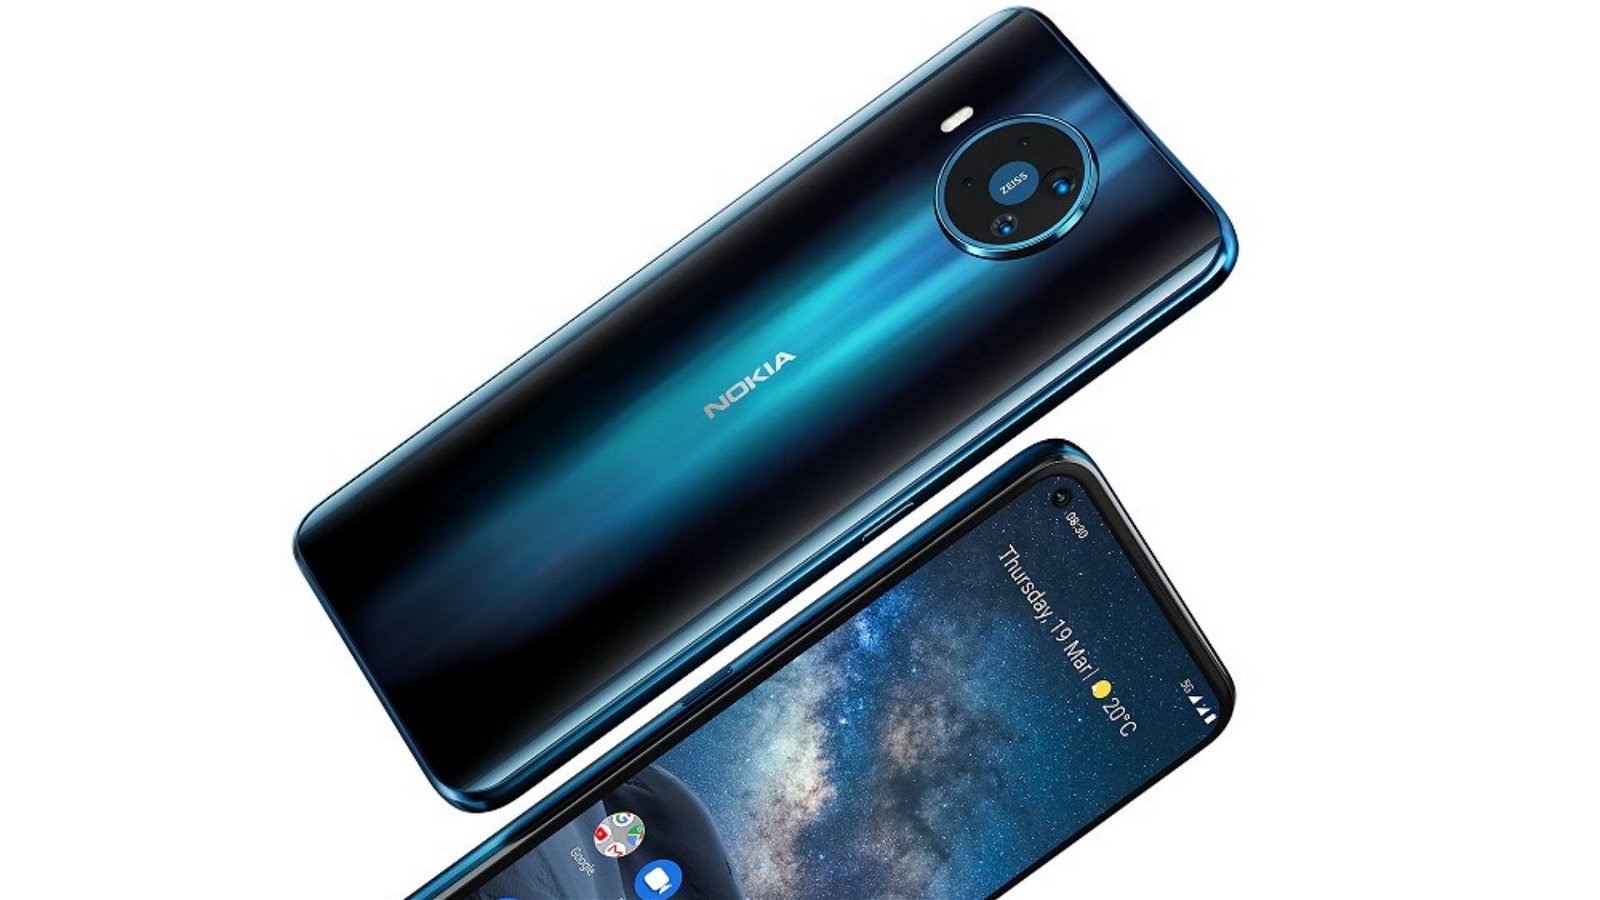 Immagine di Nokia 8.3 5G ufficiale: caratteristiche tecniche